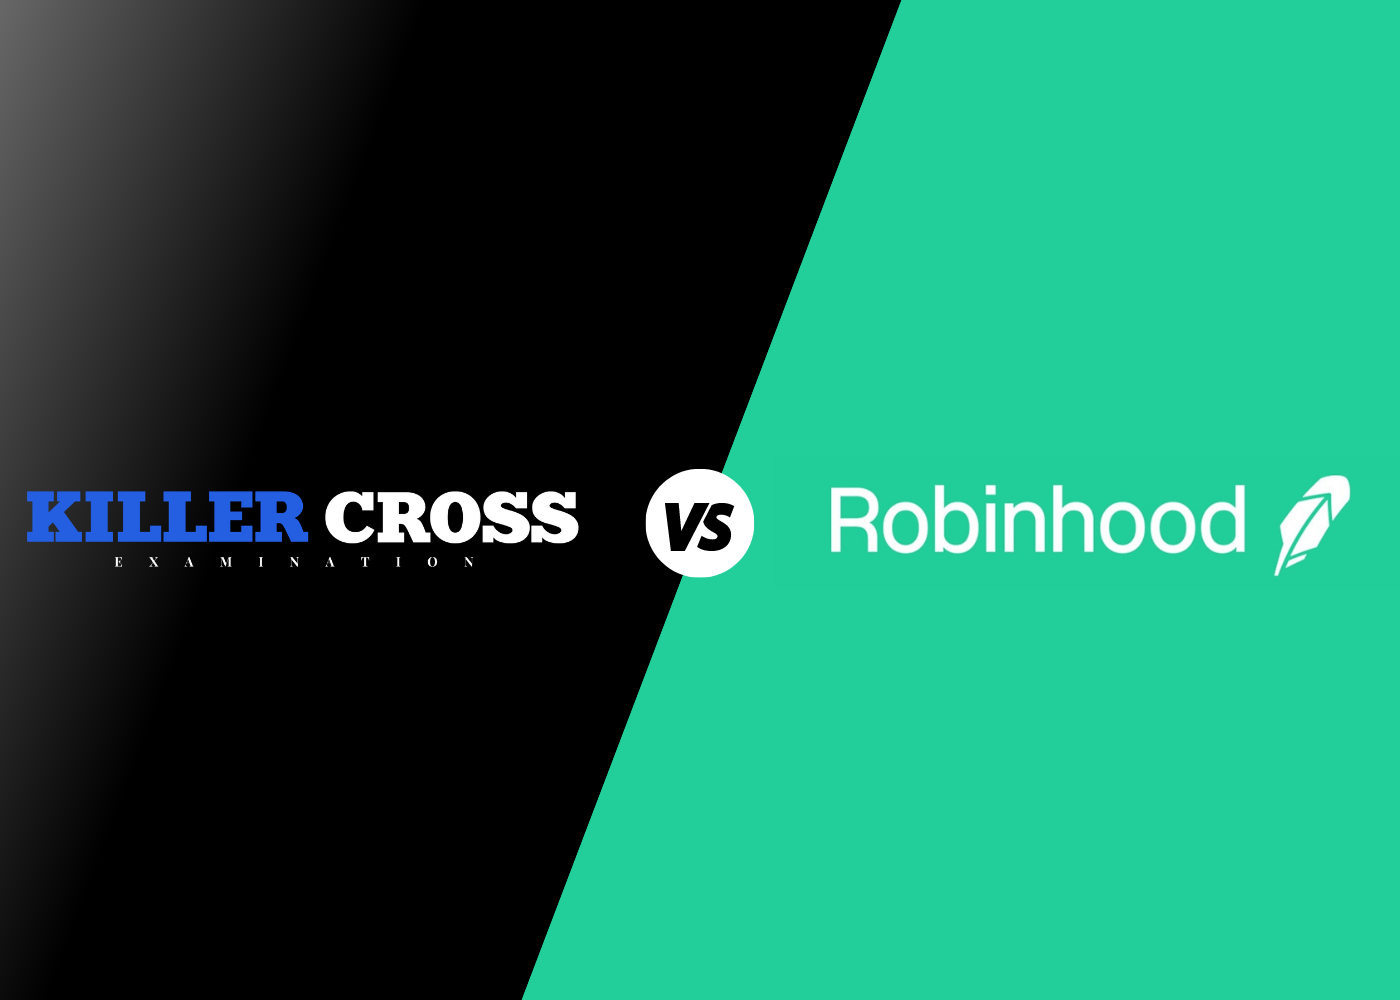 Episode 33: Killer Cross Examination Takes On Robinhood